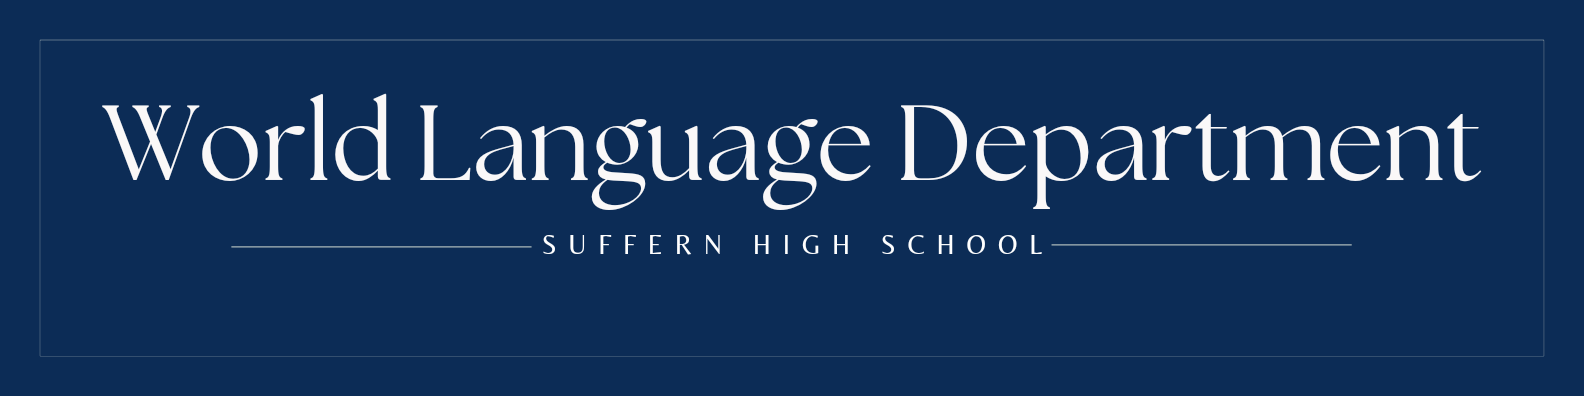 World Language Department